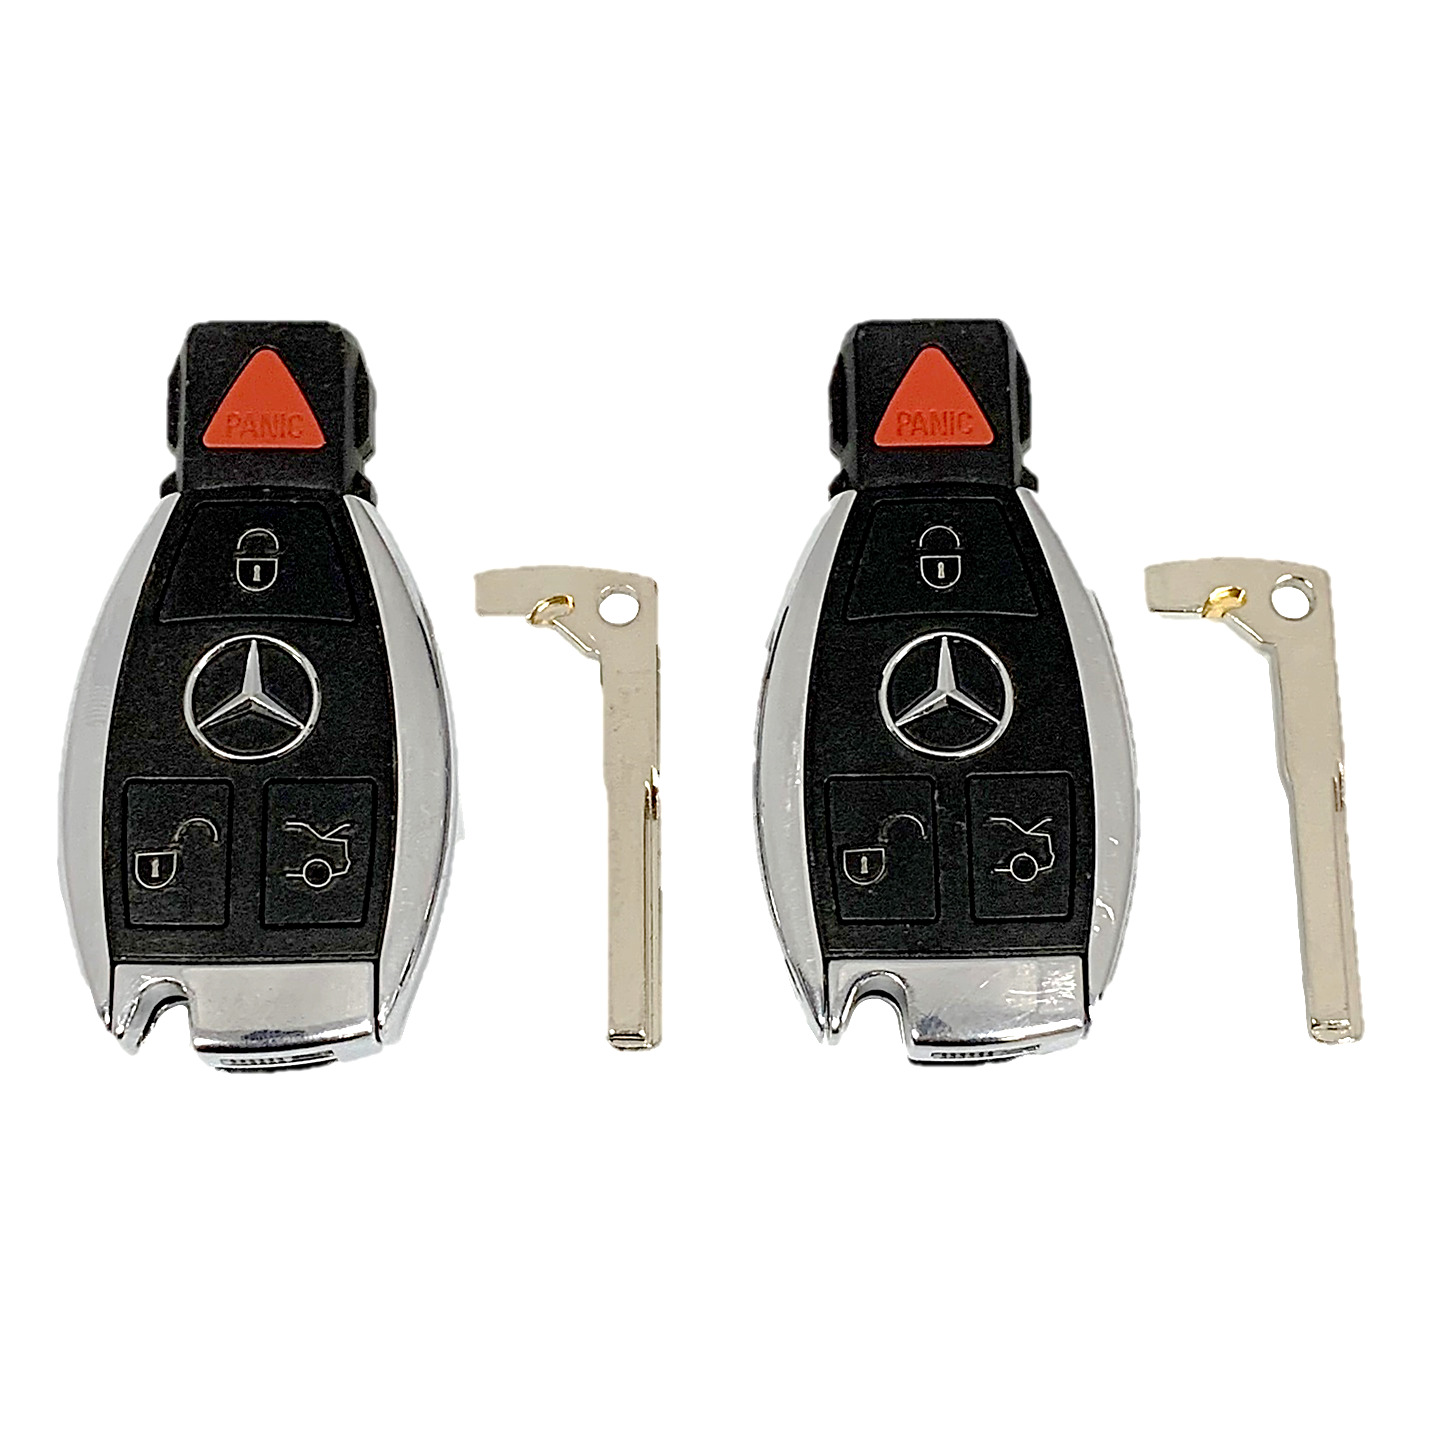 2 OEM Mercedes Benz Keyless Remote Fobs + UNCUT Keys IYZDC07 DC10 DC11 DC12